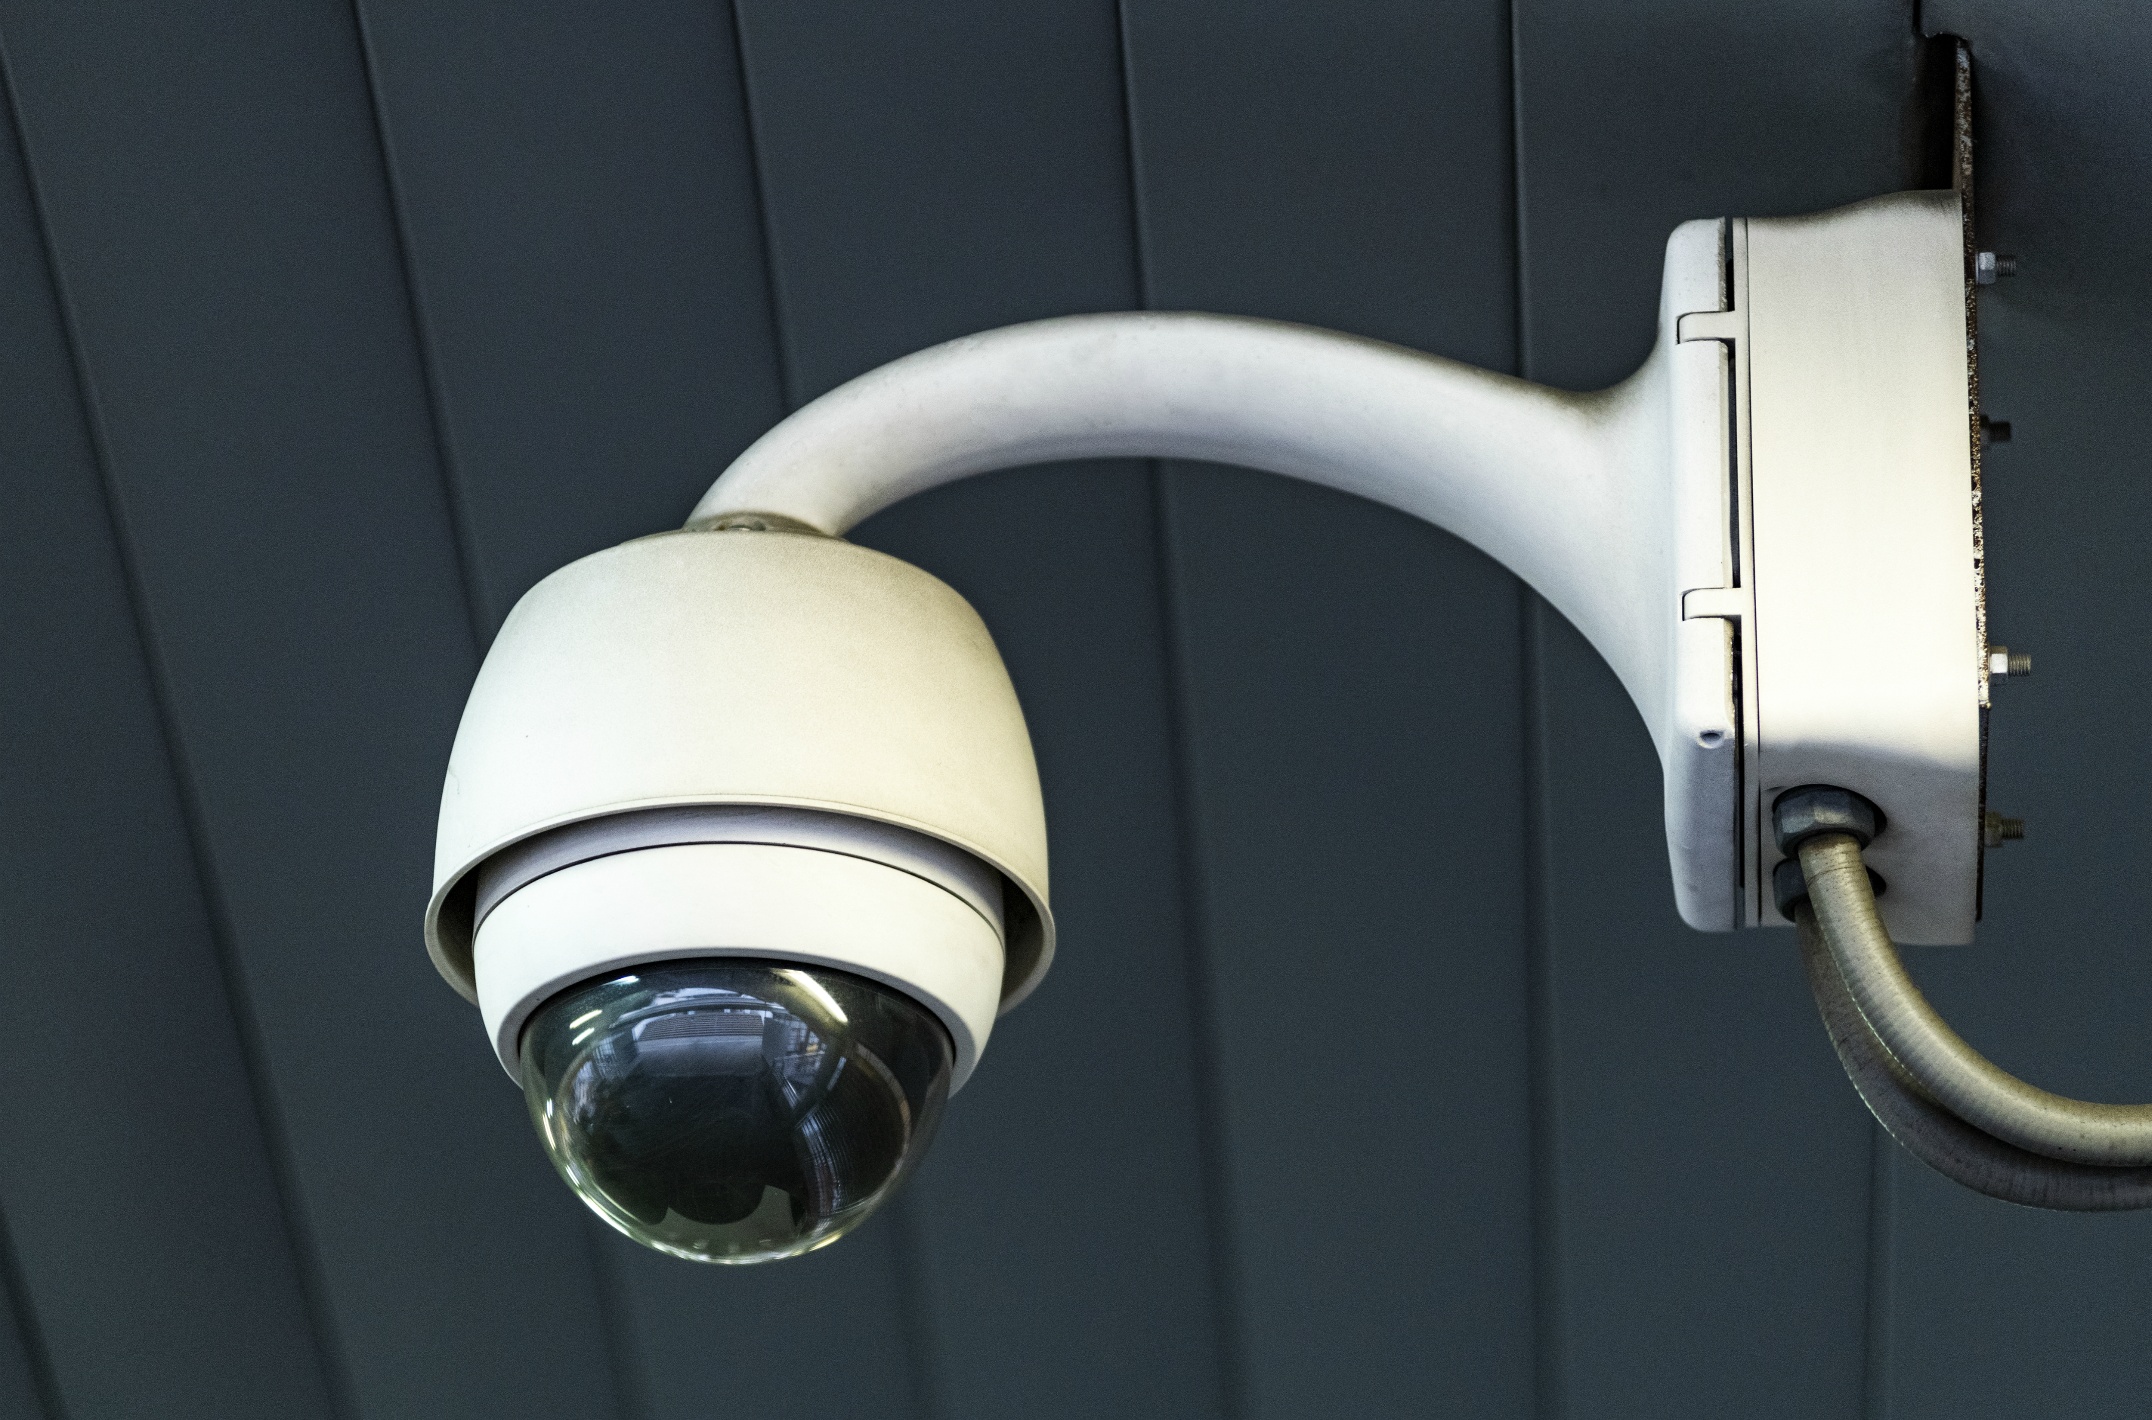 cctv-security-camera-ceiling